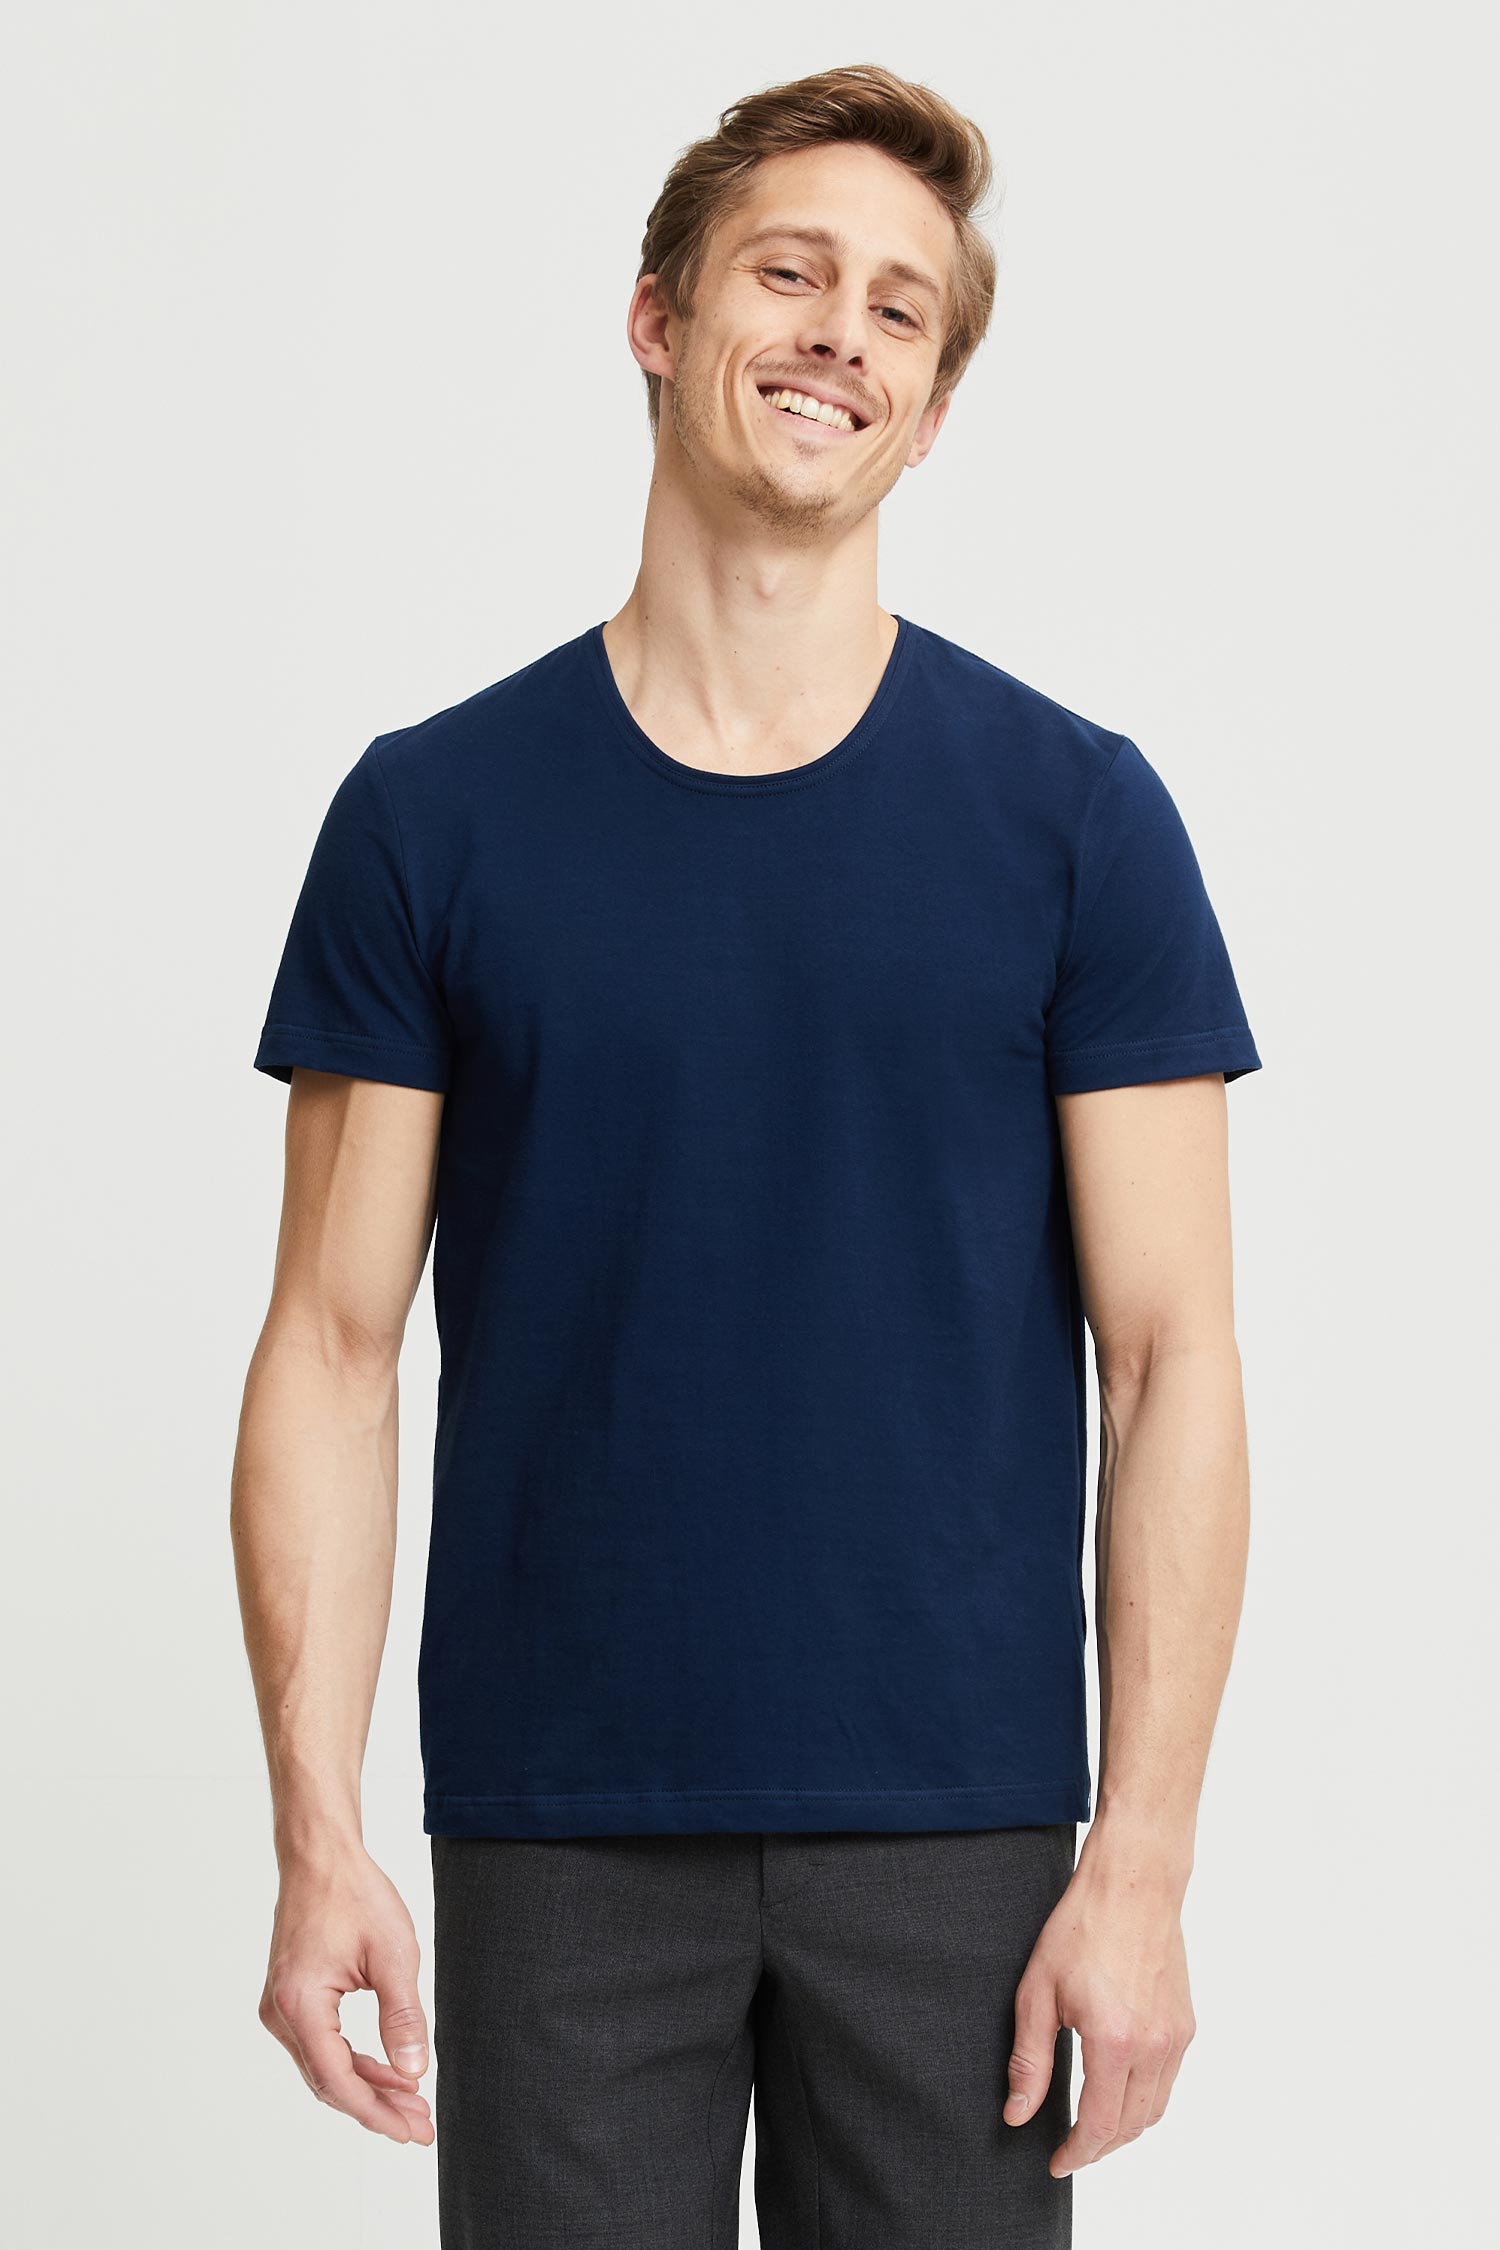 Henri T-Shirt